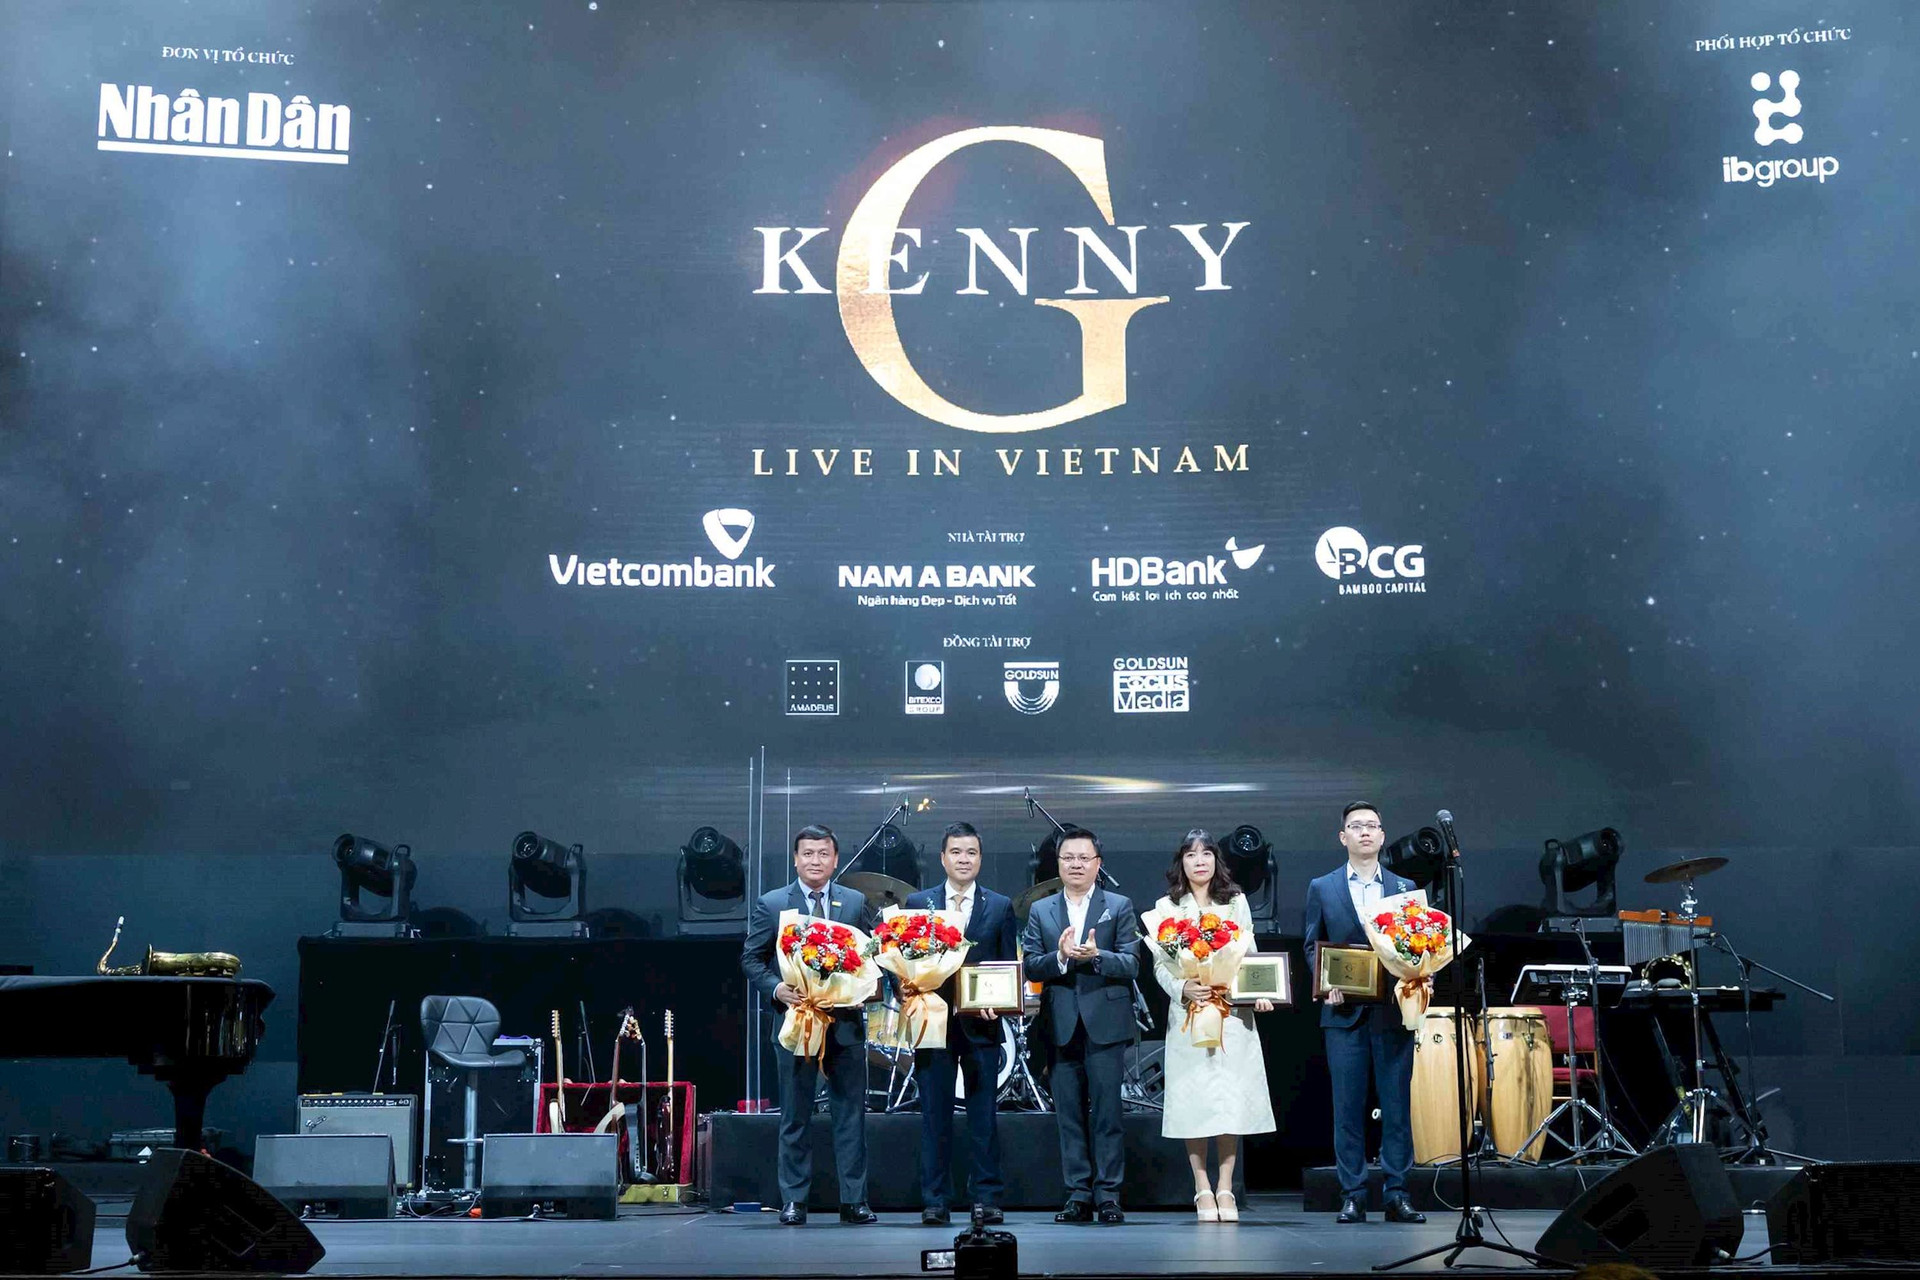 kenny-g-live-in-vietnam-3-3.jpg